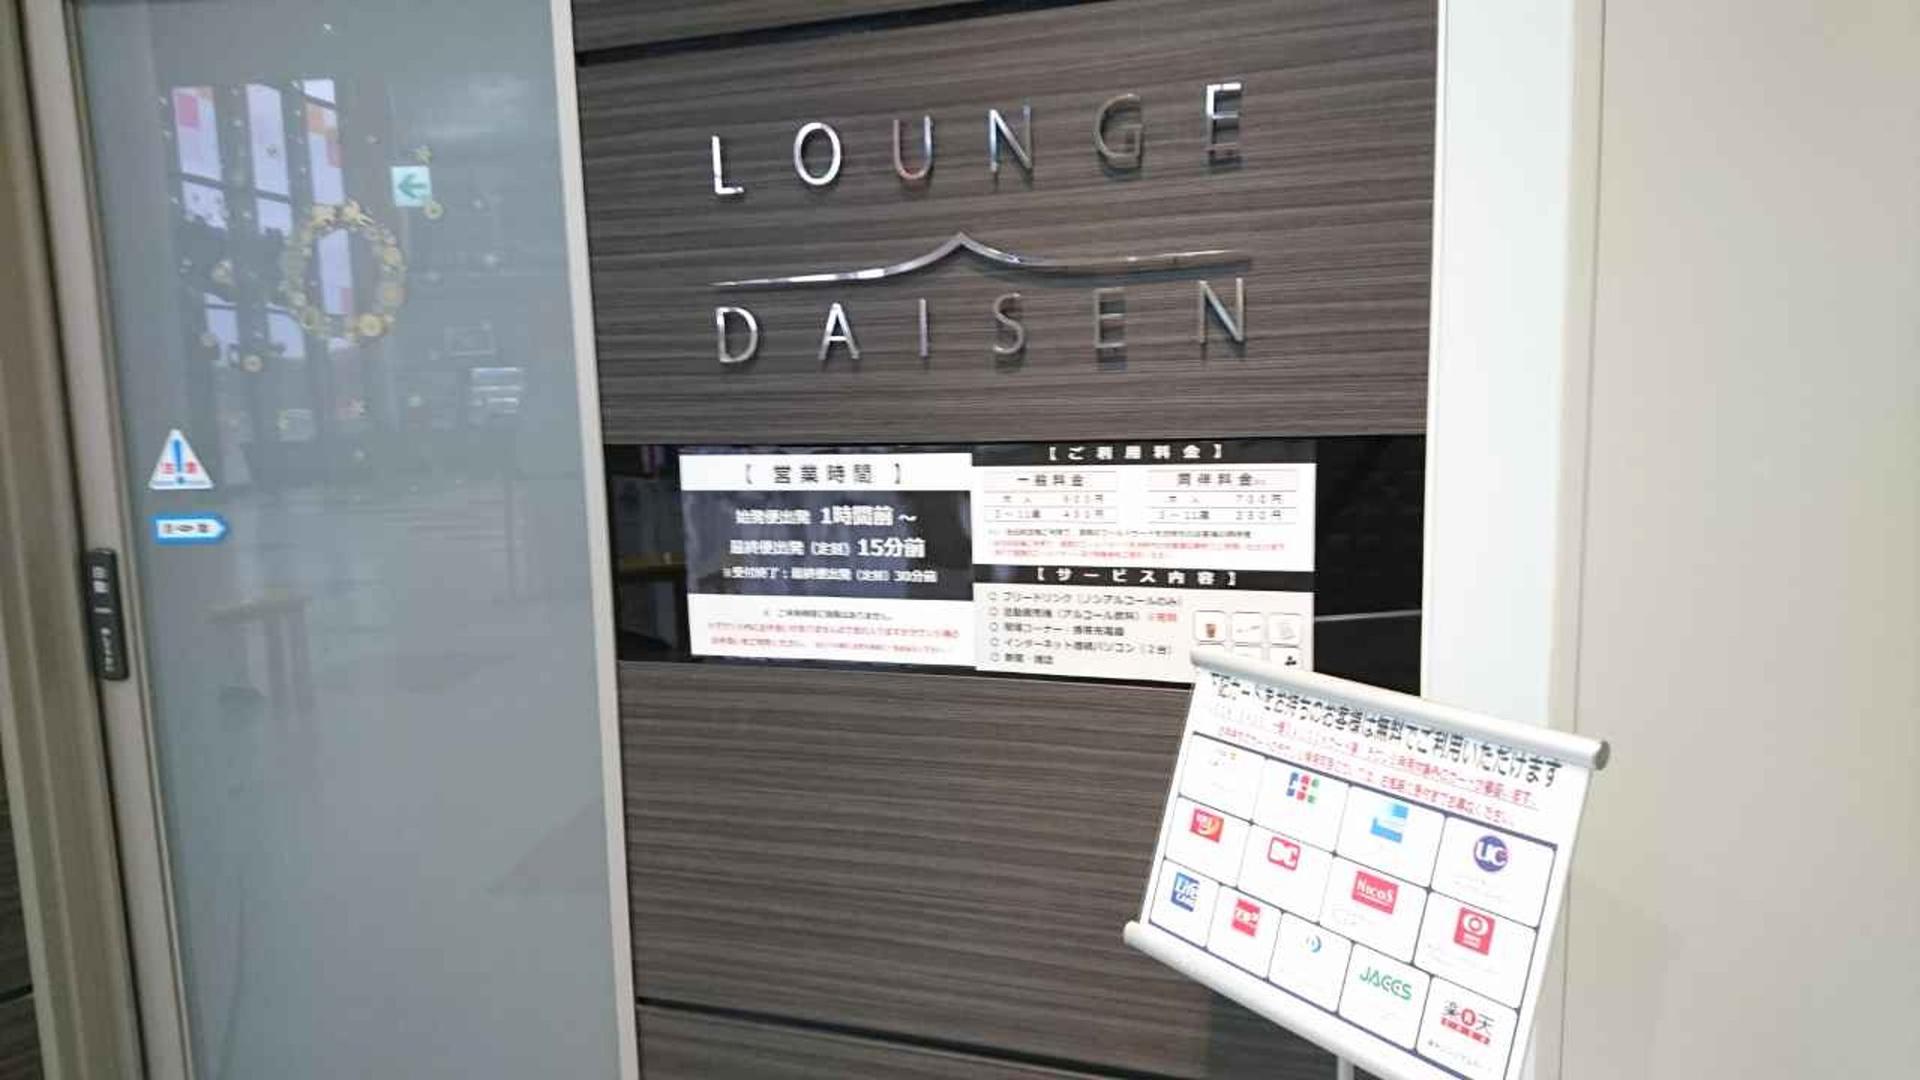 Lounge Daisen image 3 of 8